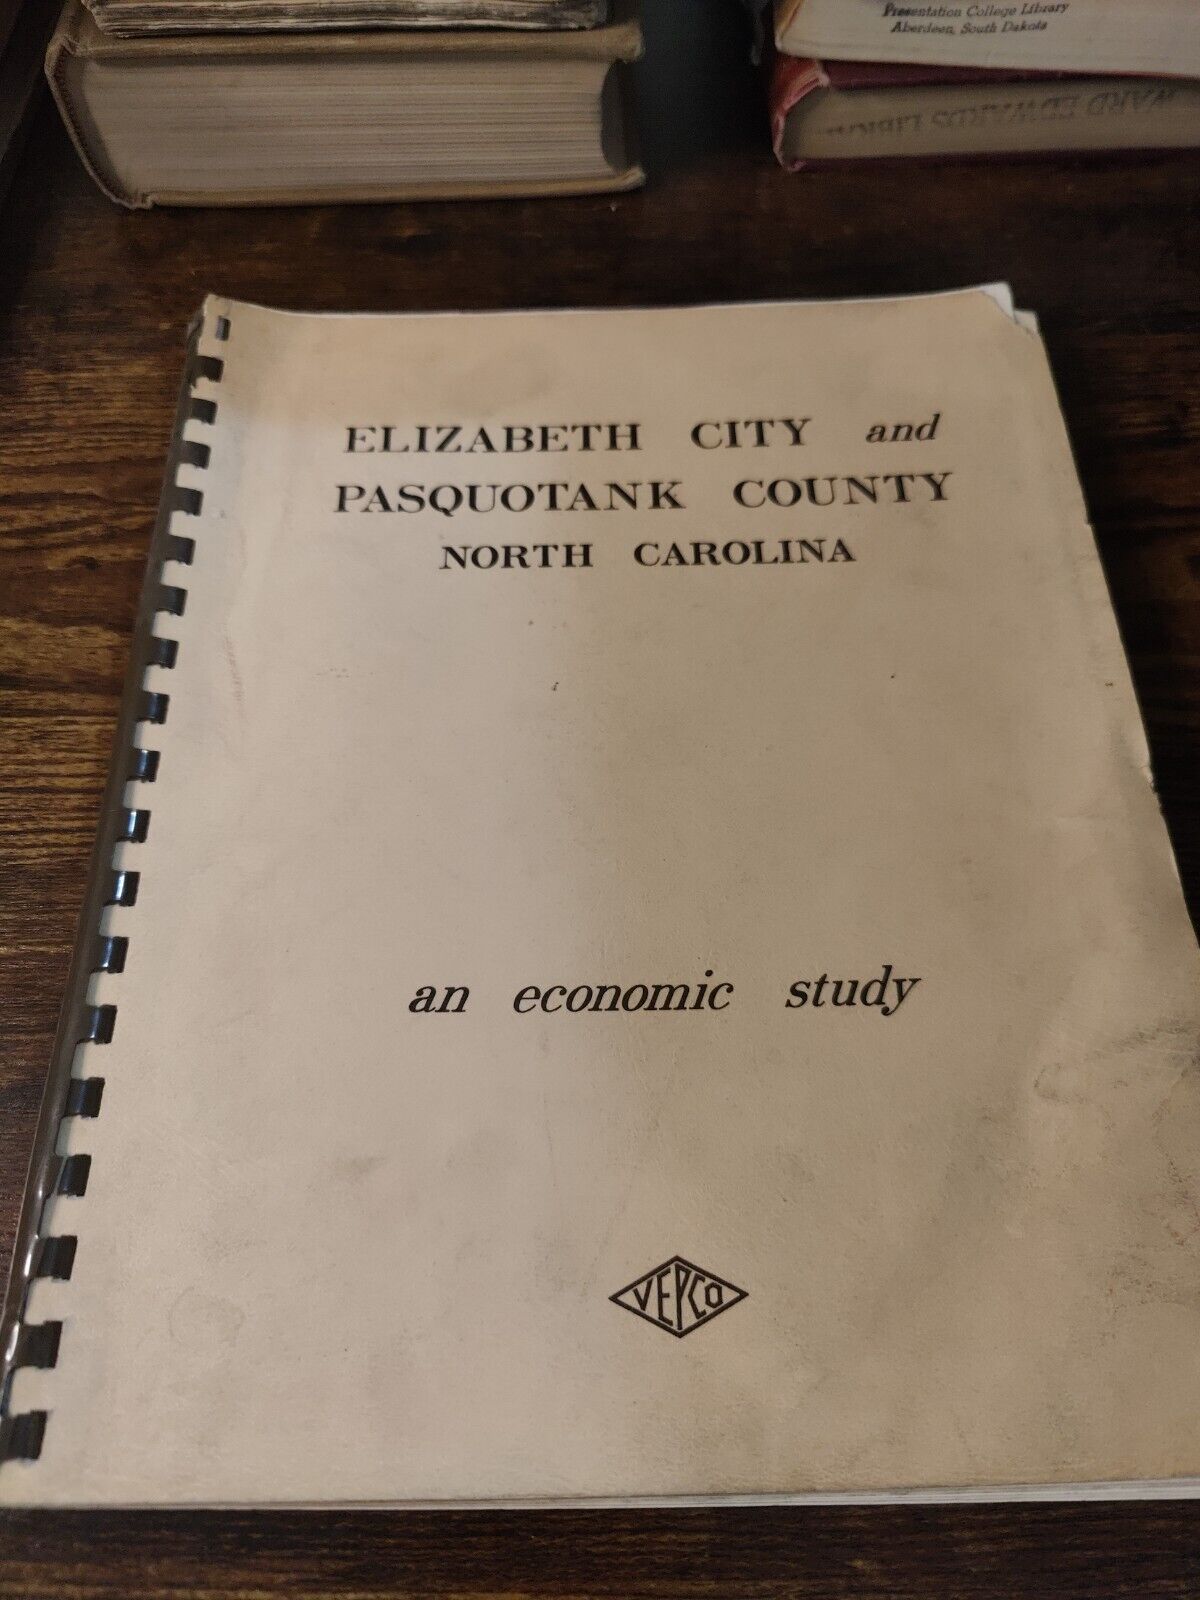 1967 Vintage Book: Elizabeth City & Pasquotank County An Economic Study